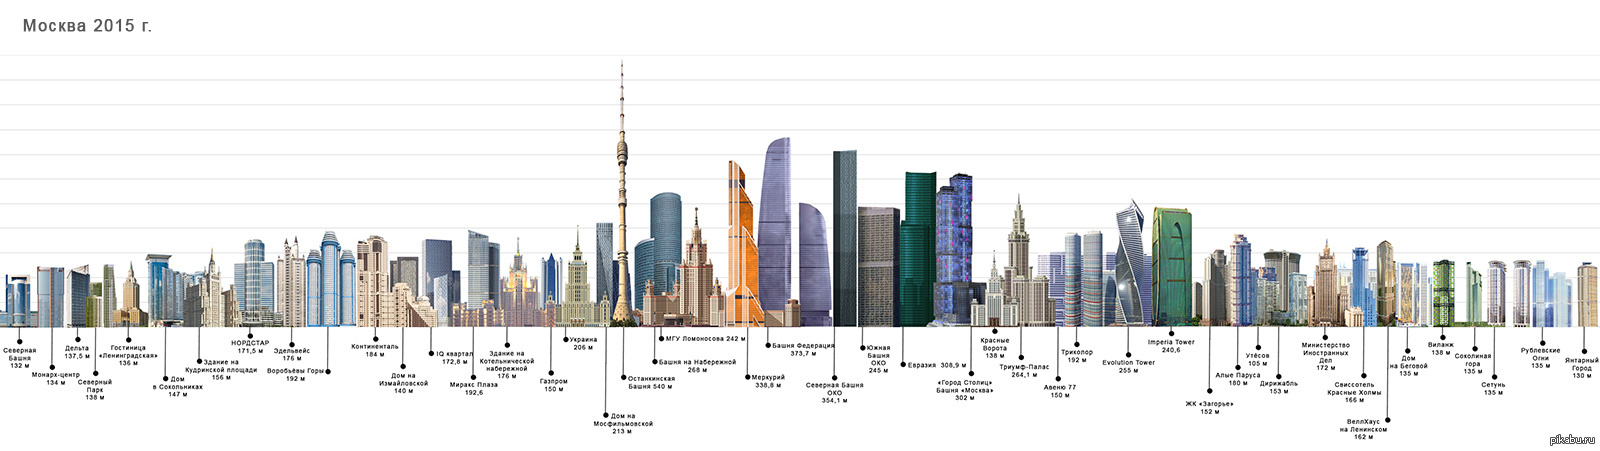 Сколько этажей в россии. Москва Сити высота зданий. Москва Сити план башен. Схема Москва Сити с названиями башен. Высота самого высоко здания в Москва ситм.